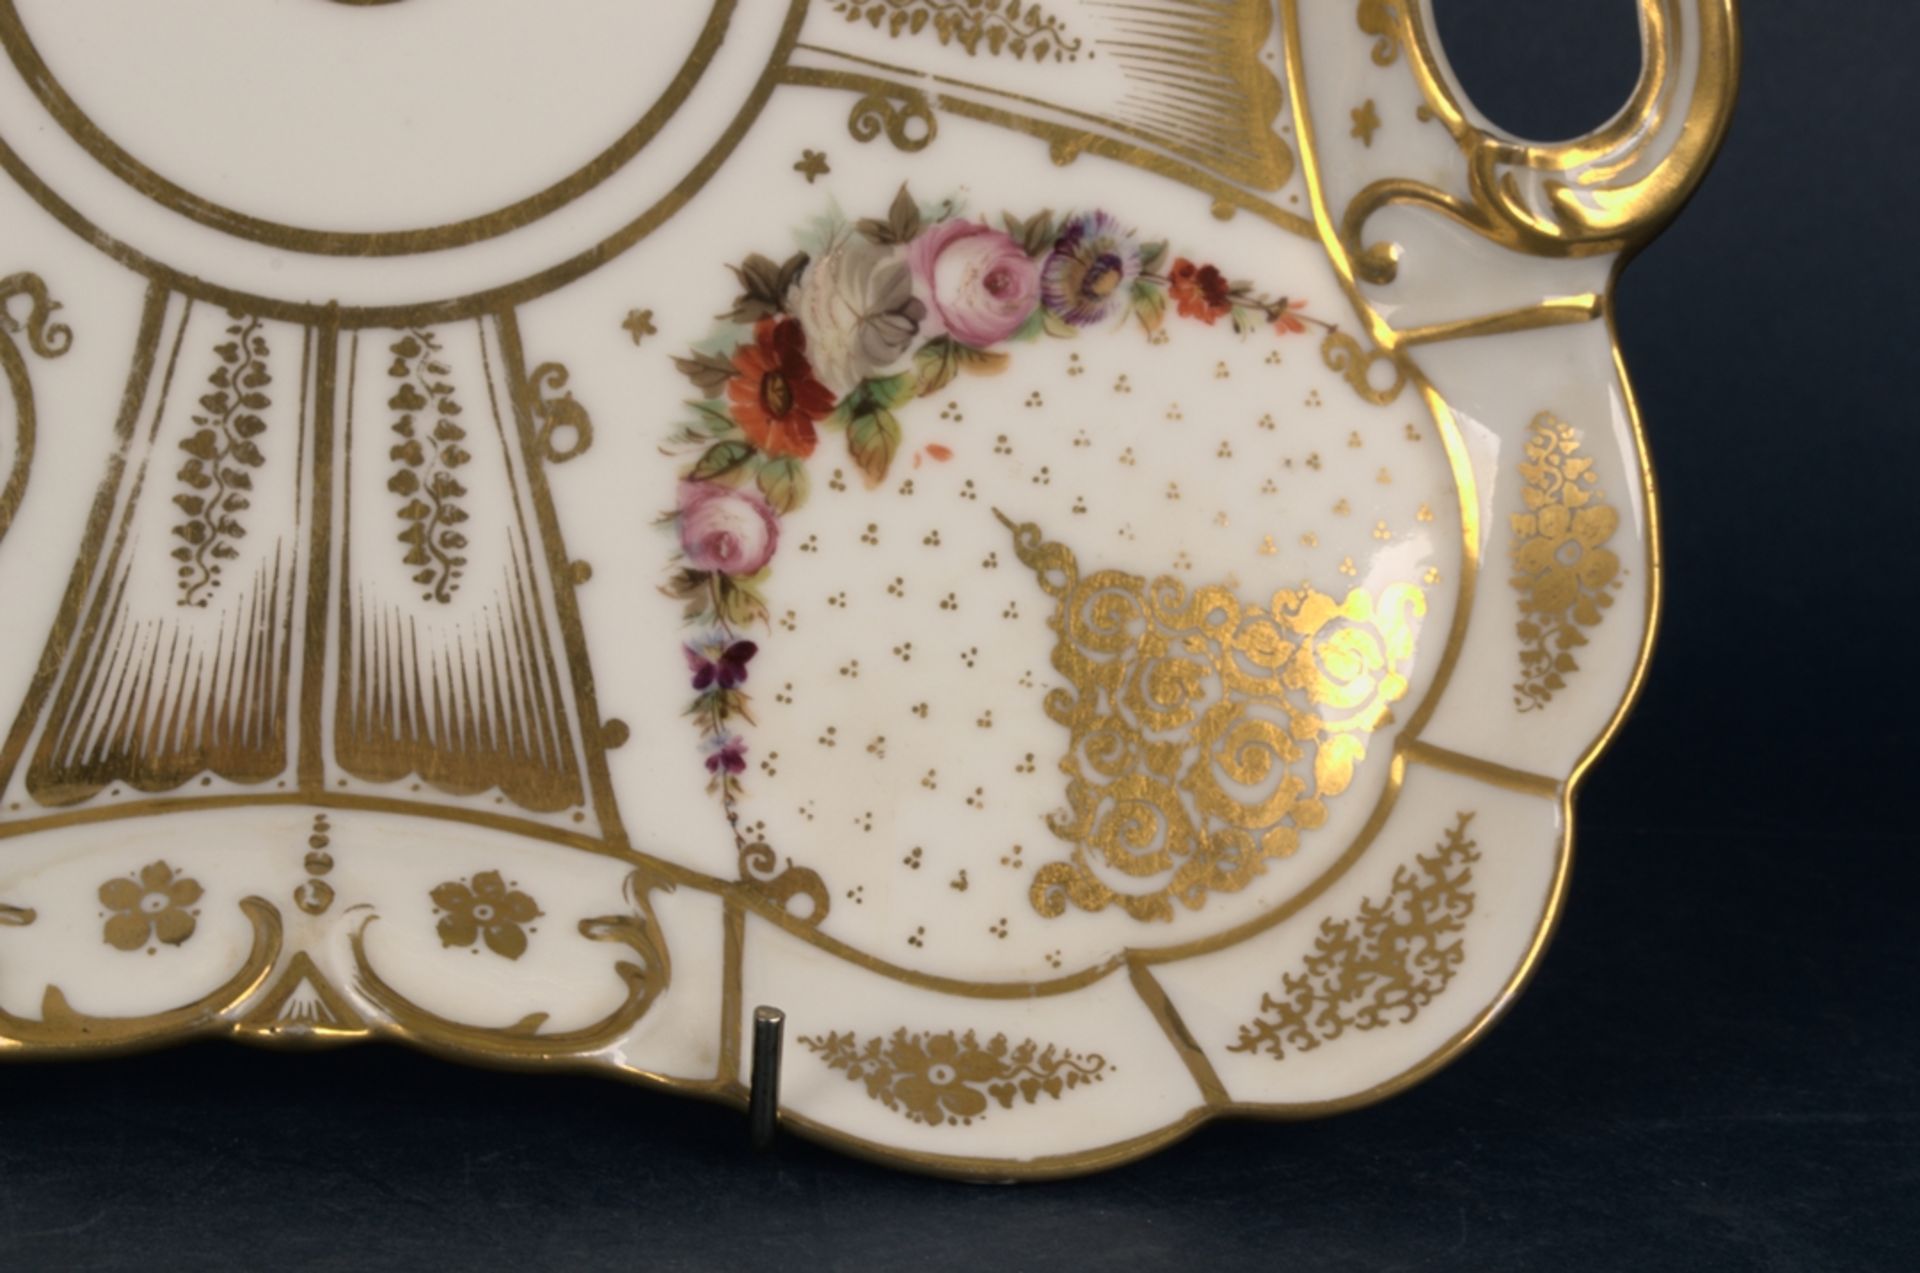 4teiliges Set, ungemarktes Weißporzellan mit polychromem Floral - & üppigem Golddekor; Belle - Image 14 of 16